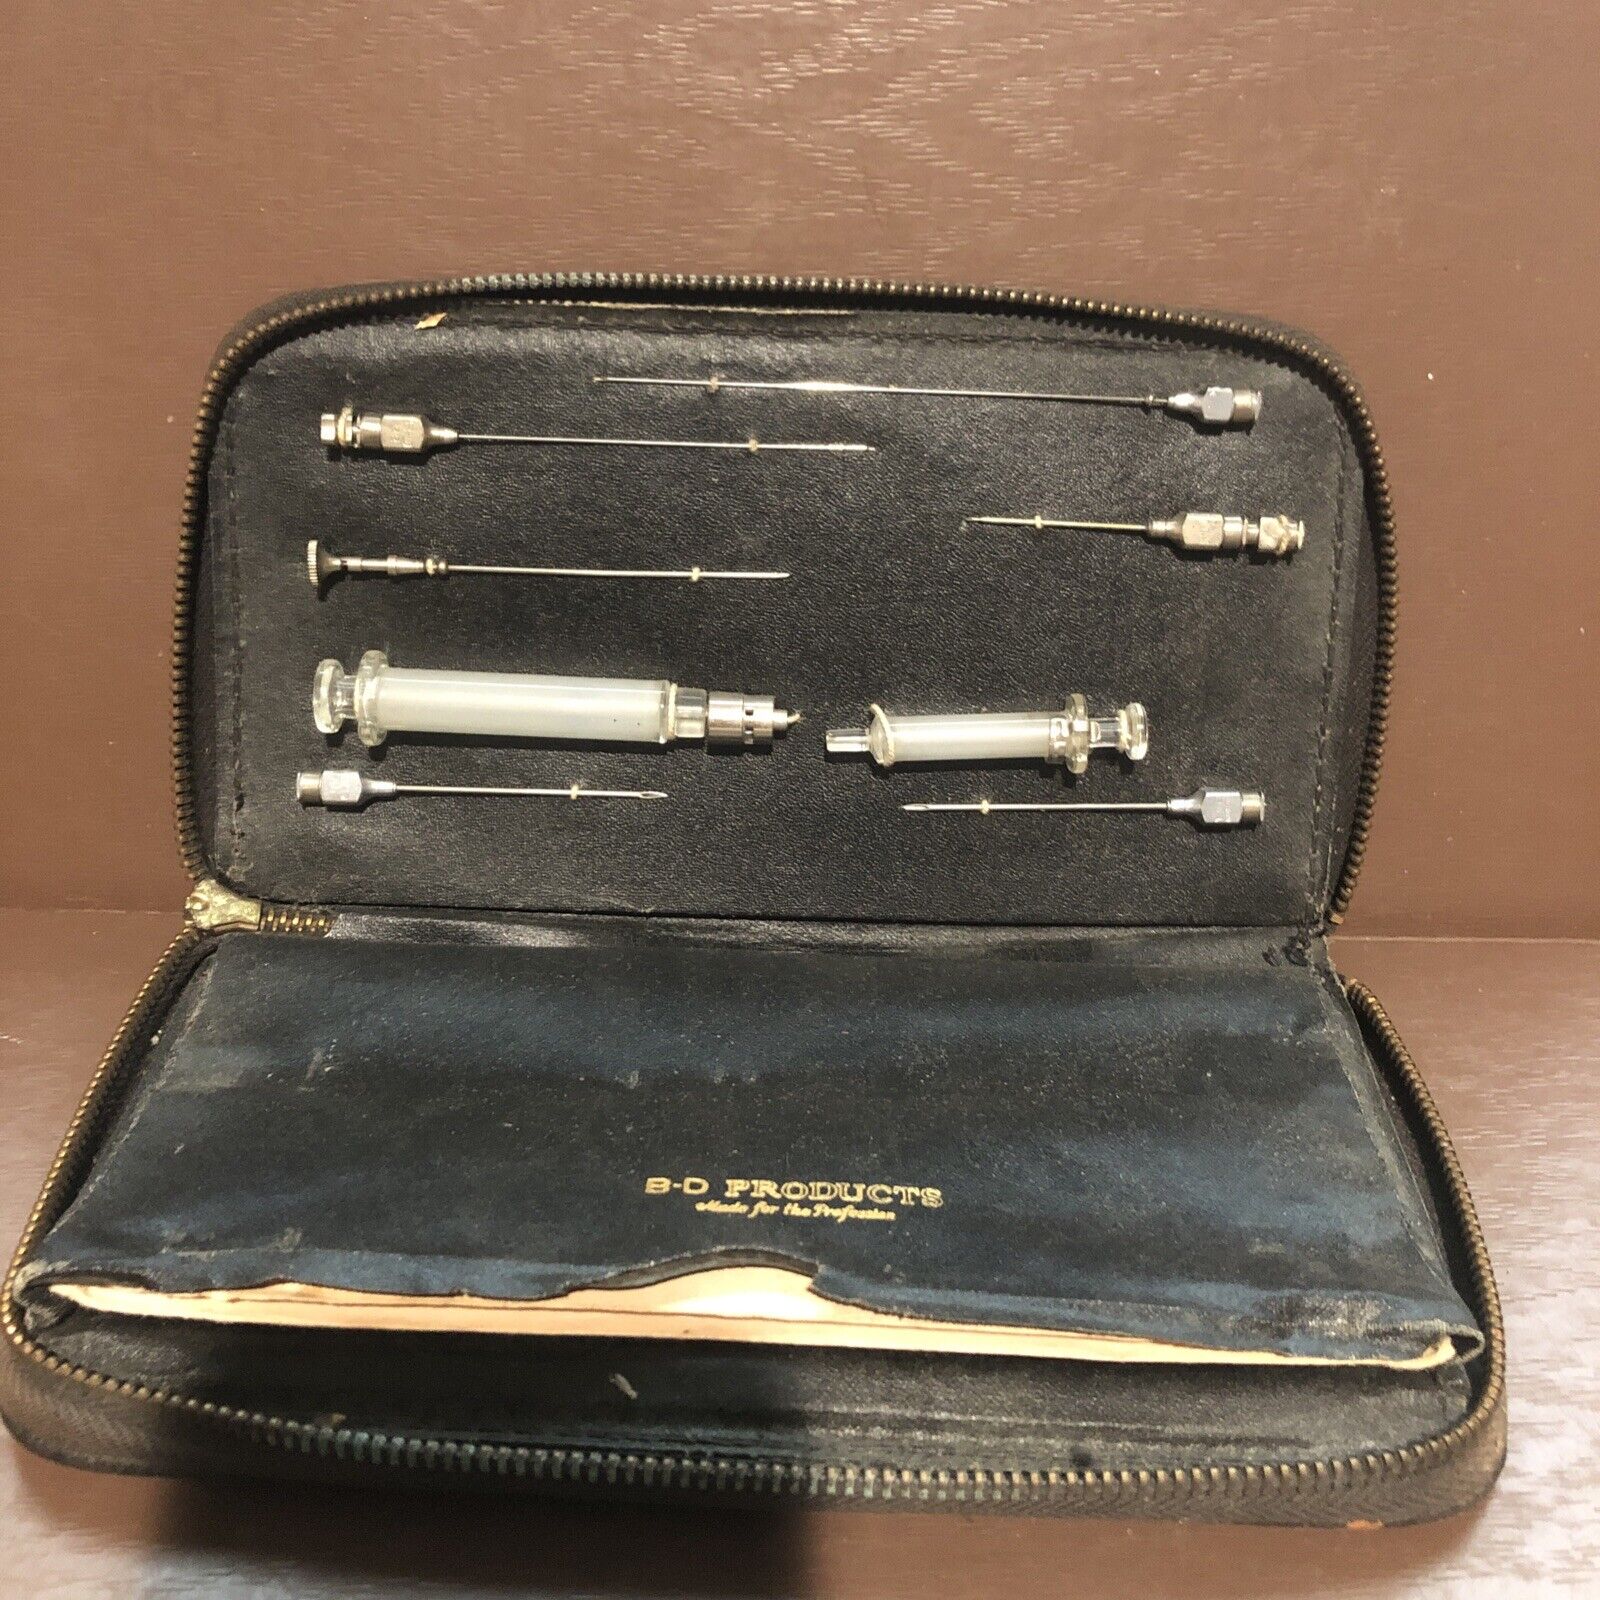 Rare WW2 B-D Salesman Sample Glass Syringe Display Kit 1944